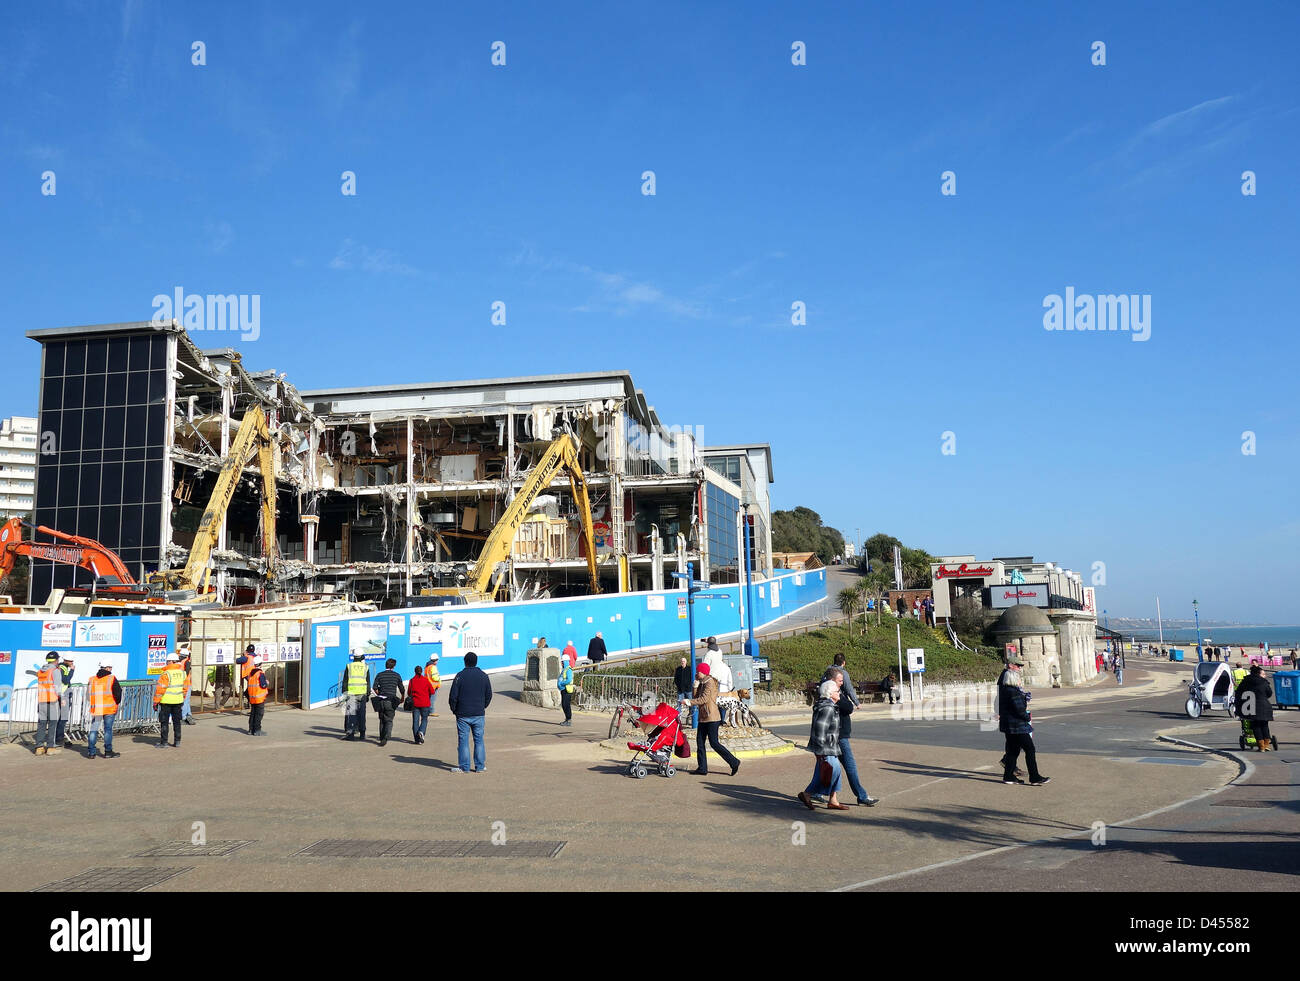 Imax cinema during demolition, Bournemouth, Dorset, Britain, UK Stock Photo